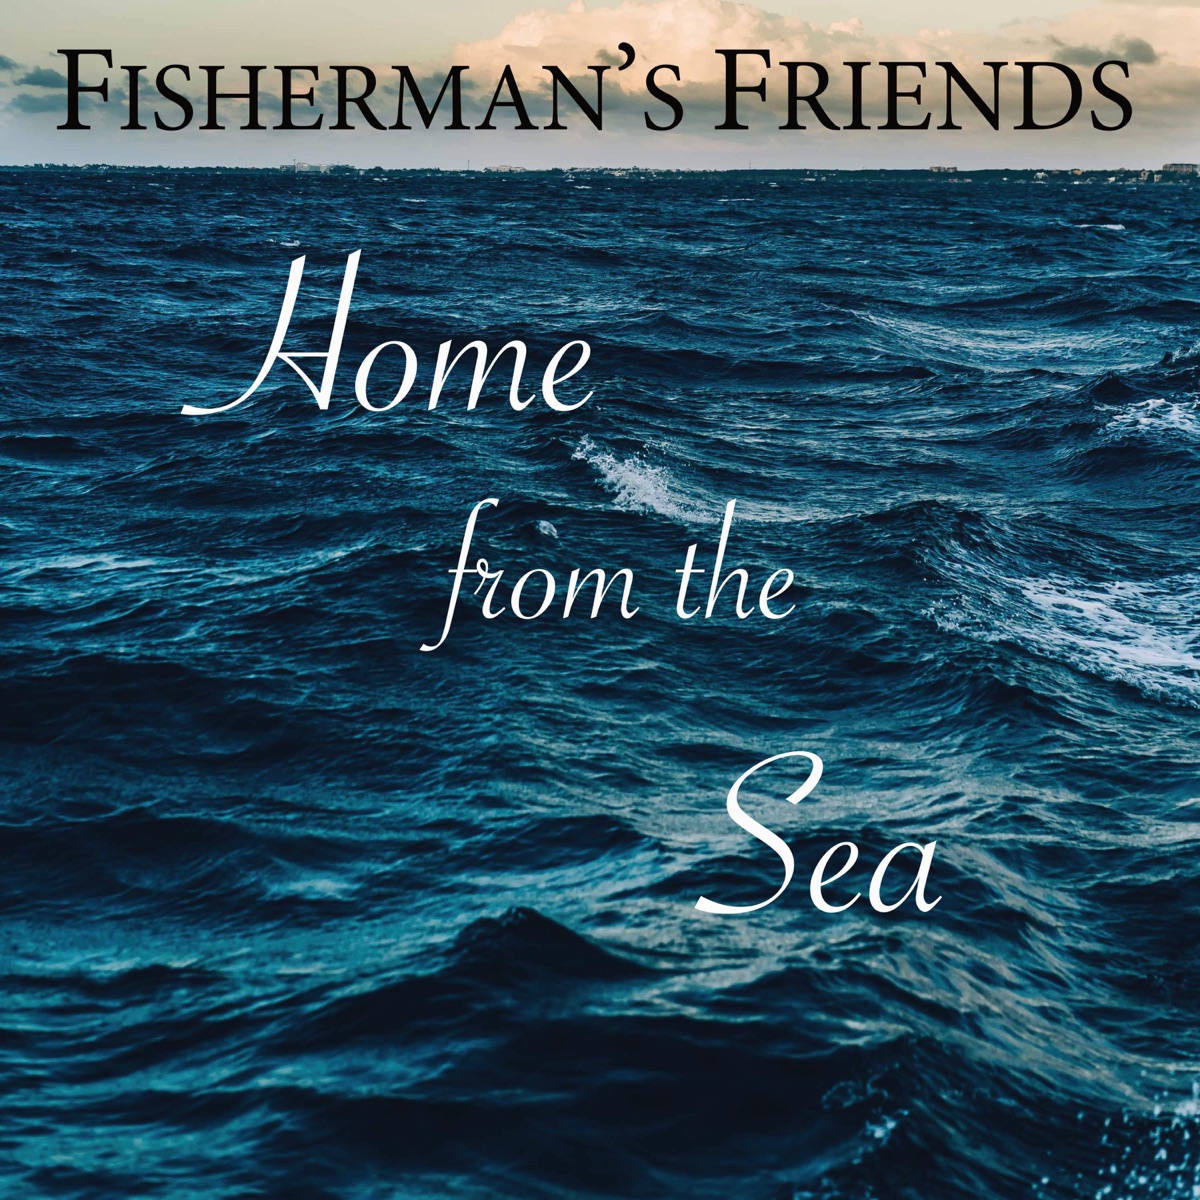 The Fisherman's Friends - Apple Music